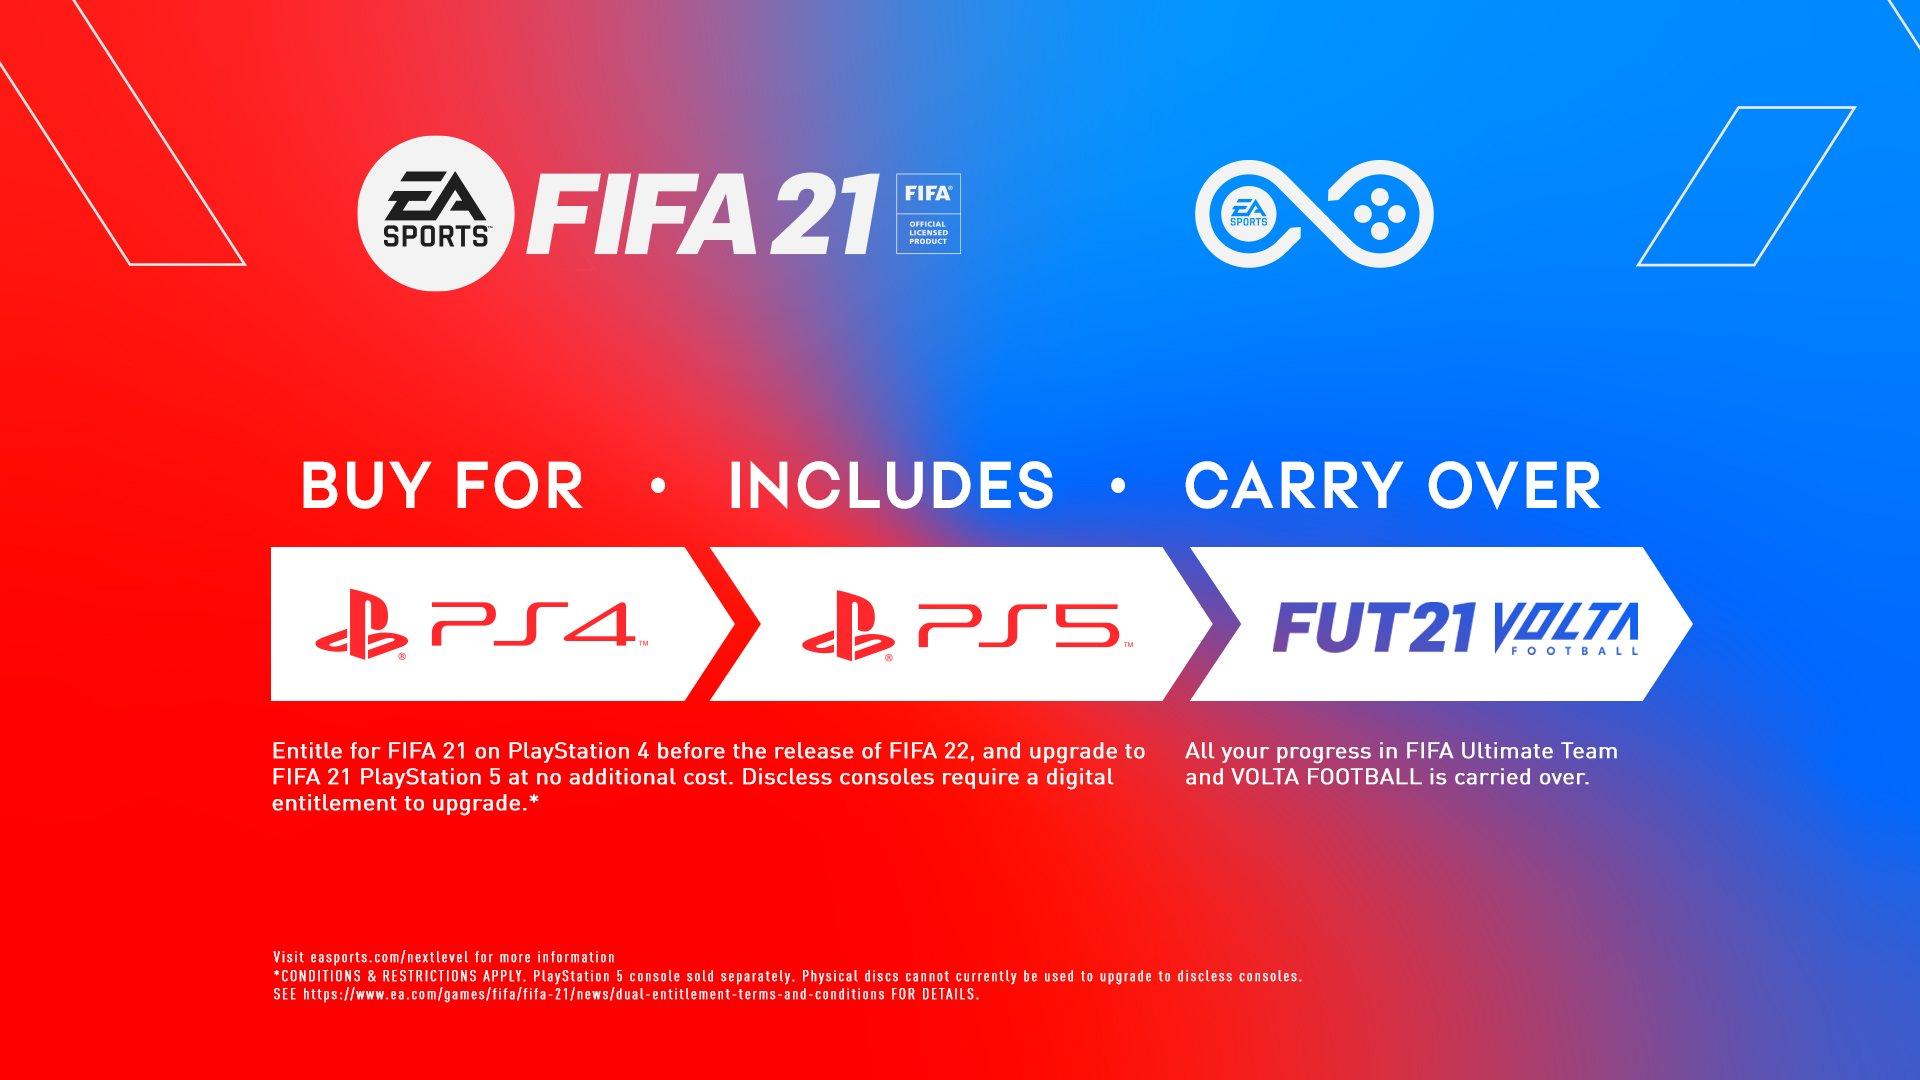 FIFA 22 - PS4 | PlayStation 4 | GameStop